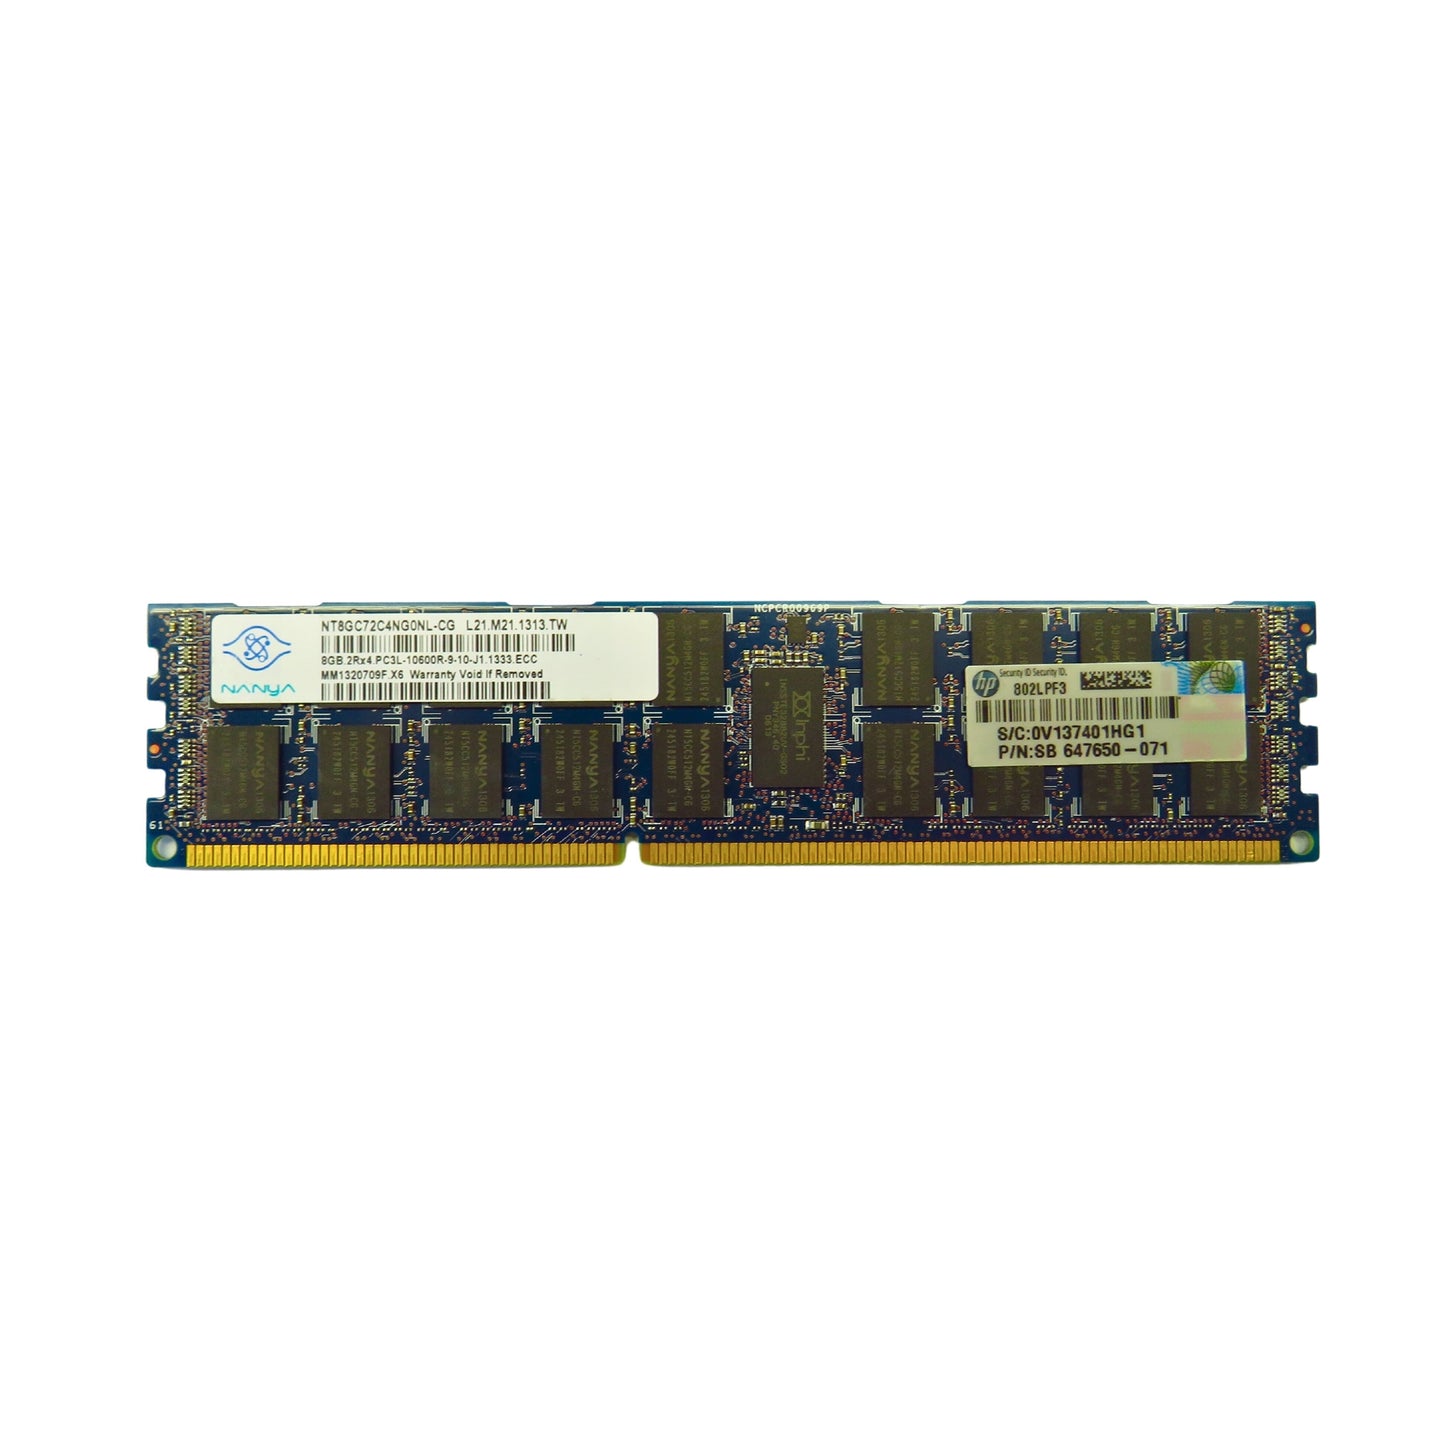 HP 647650-071 8GB 2Rx4 PC3L-10600R 1333MHz DDR3 ECC RDIMM Server Memory (Refurbished)